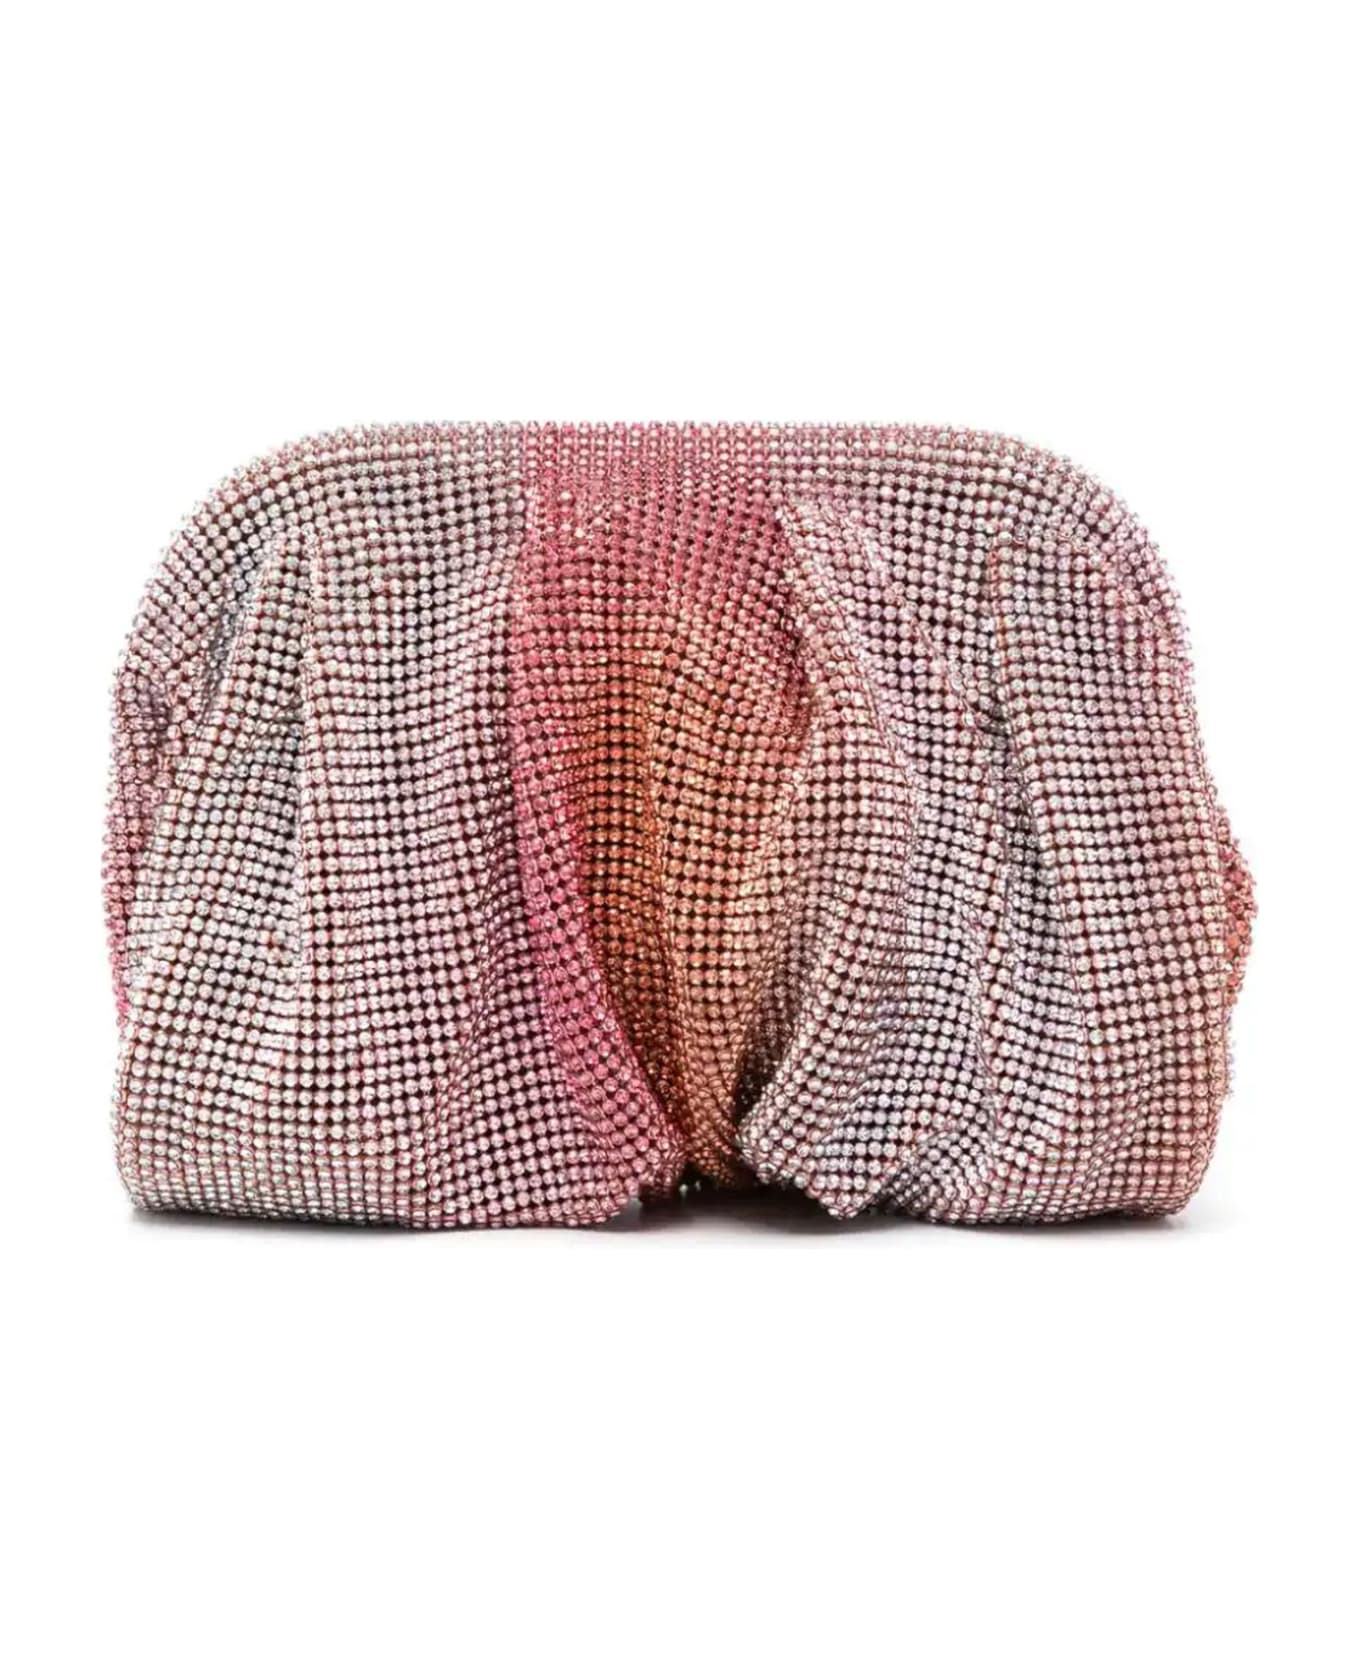 Benedetta Bruzziches Raspberry Pink Venus Petite Crystal Clutch Bag - Pink クラッチバッグ